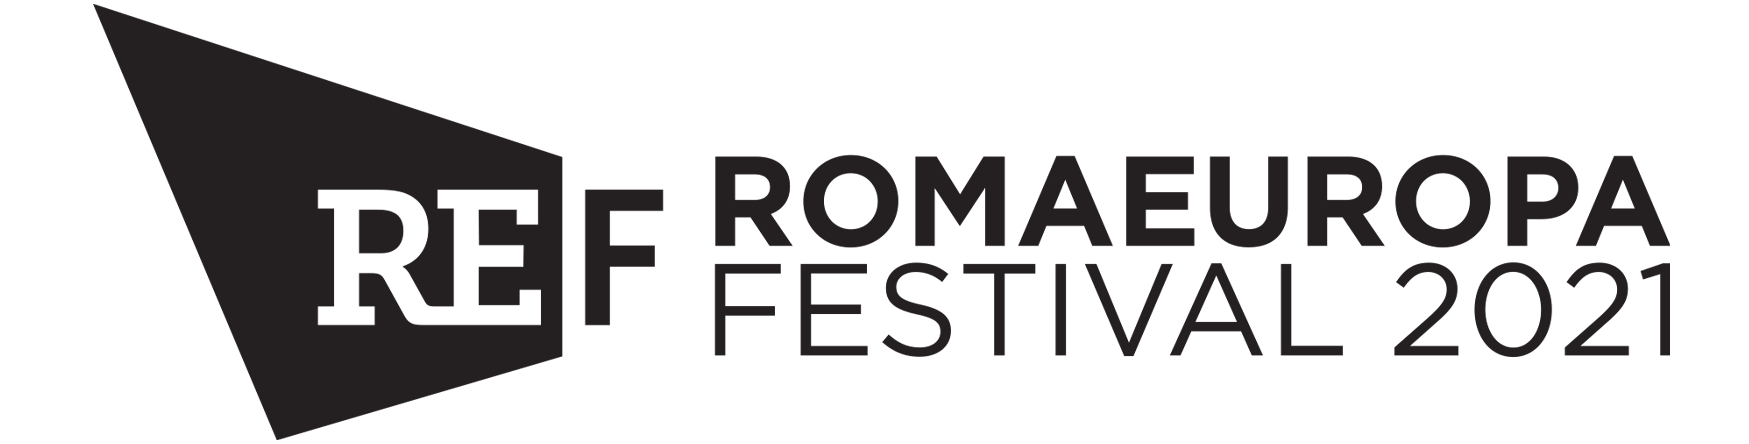 Romaeuropa Festival